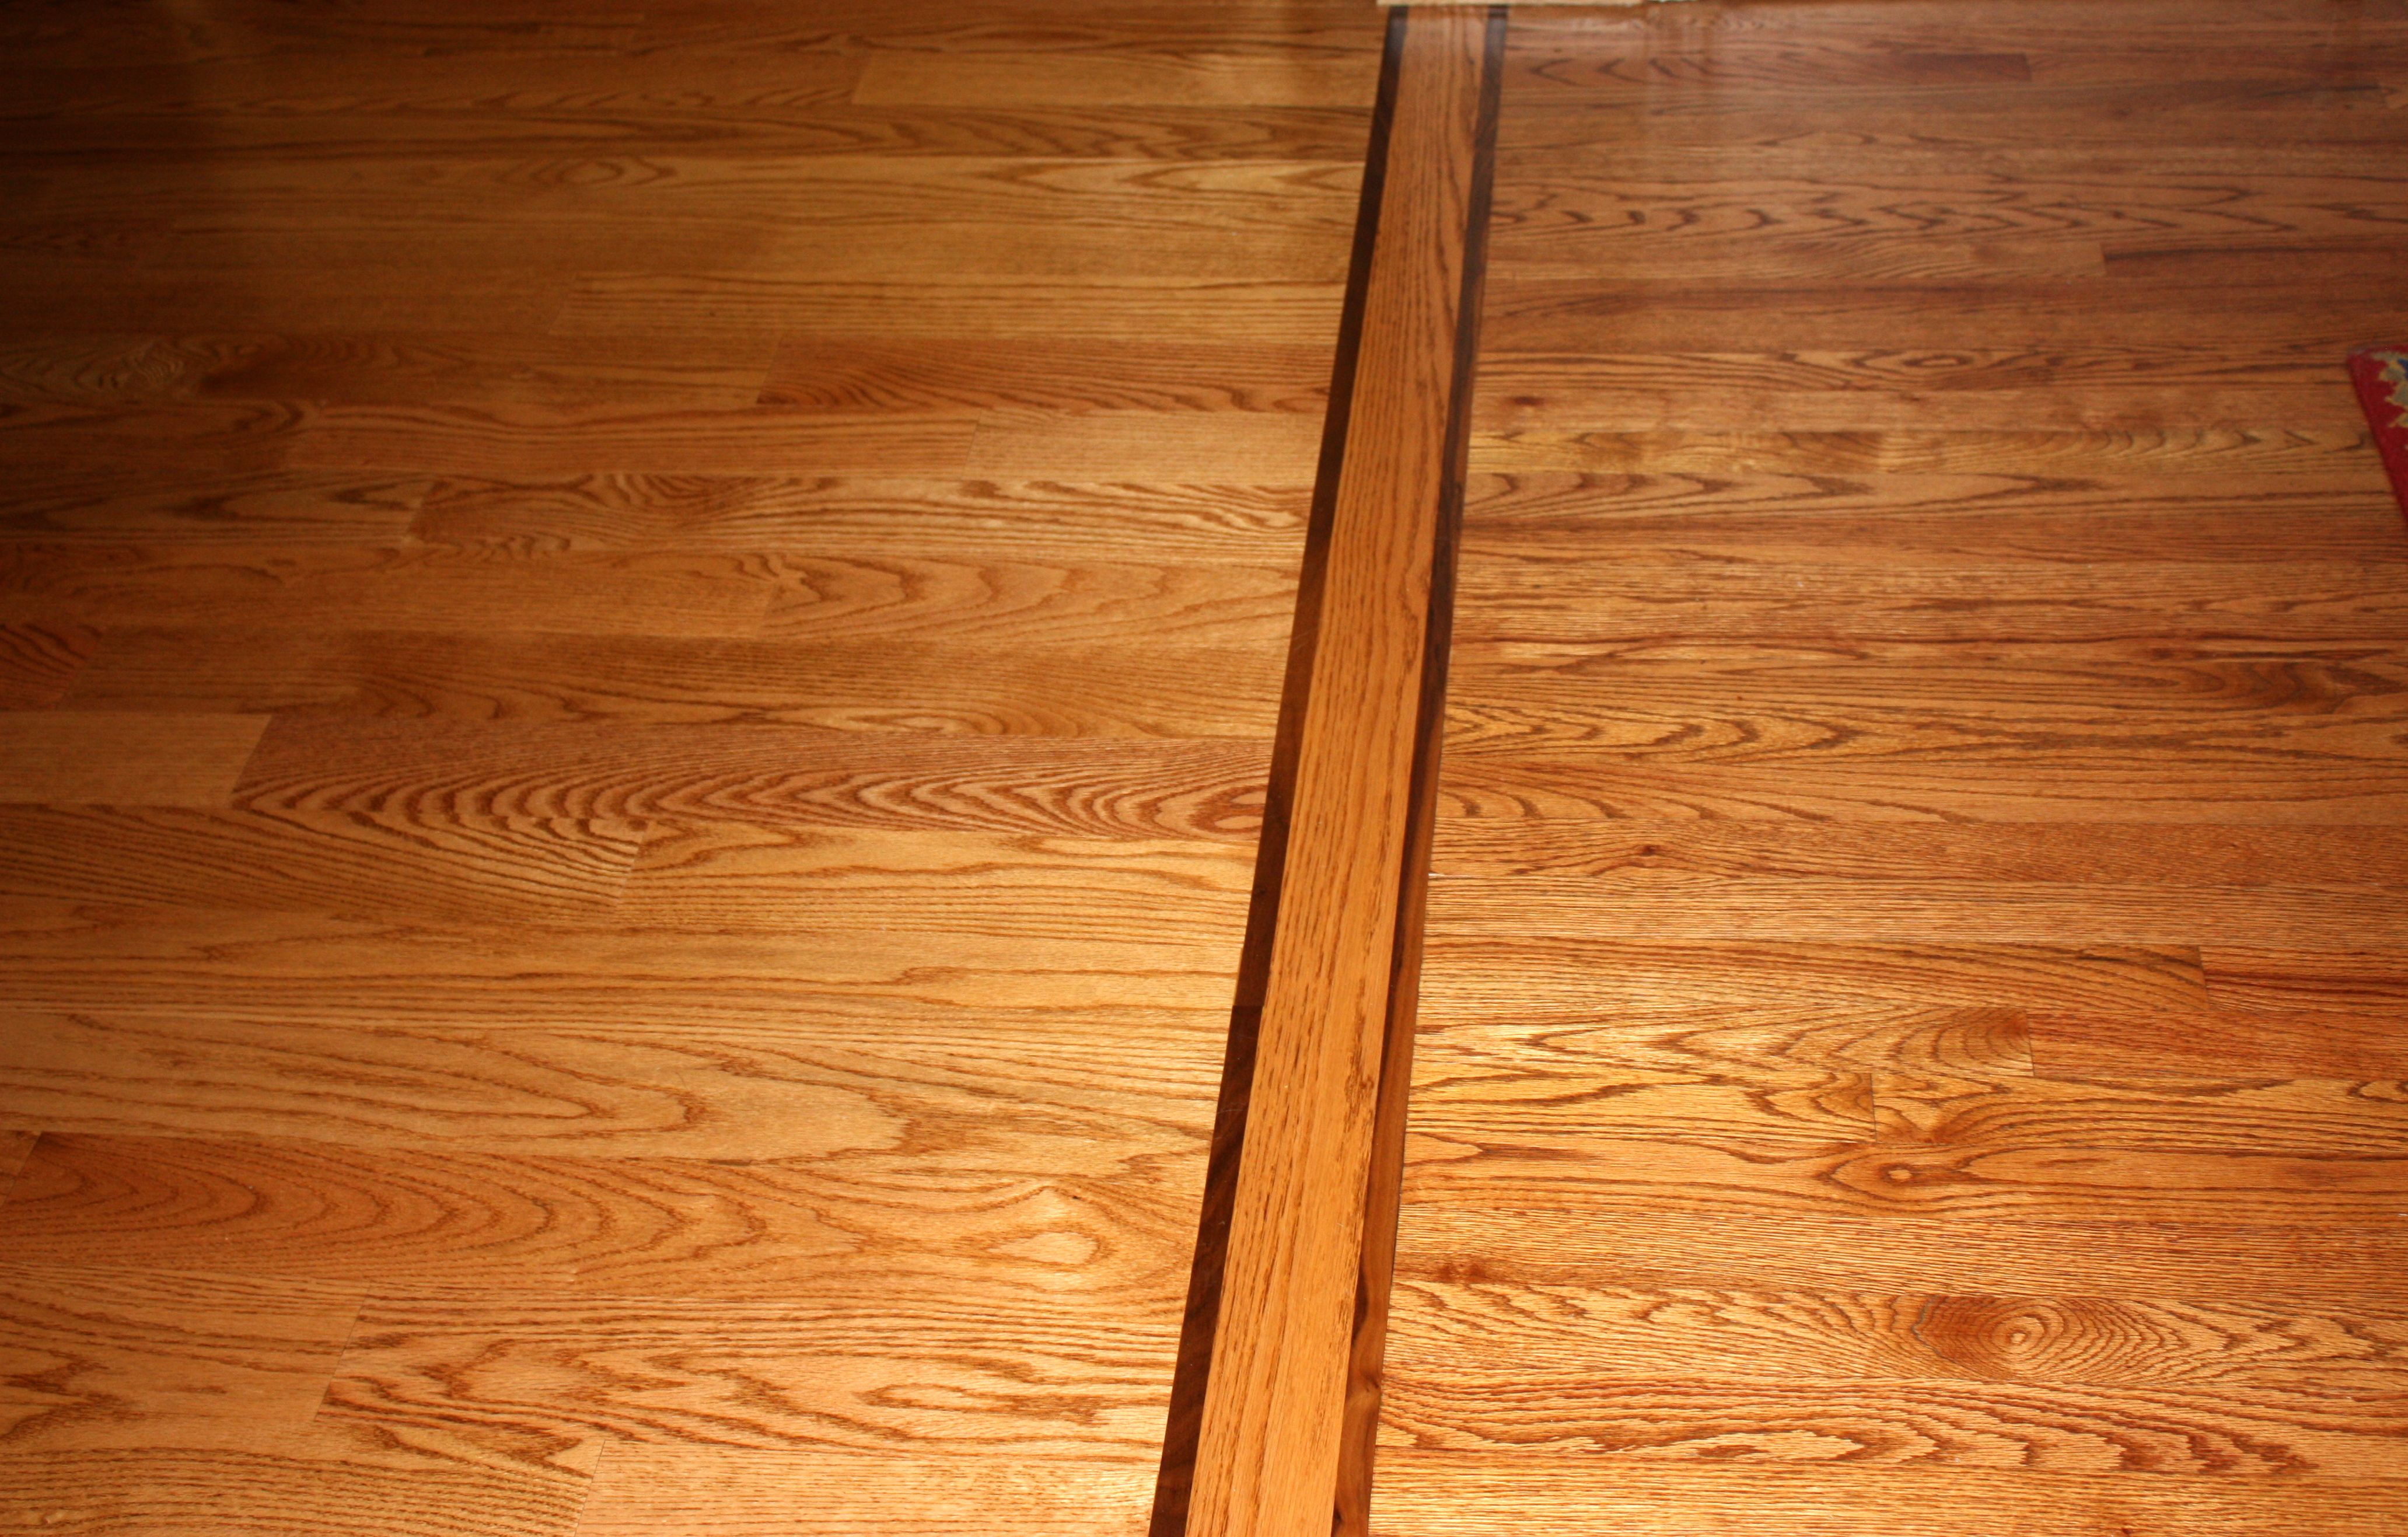 Matching An Existing Hardwood Floor, How To Match Up Hardwood Floors